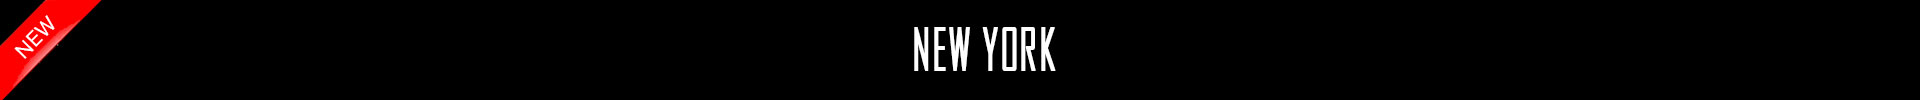 TOTALPRESTIGE MAGAZINE - NEW YORK ONLINE